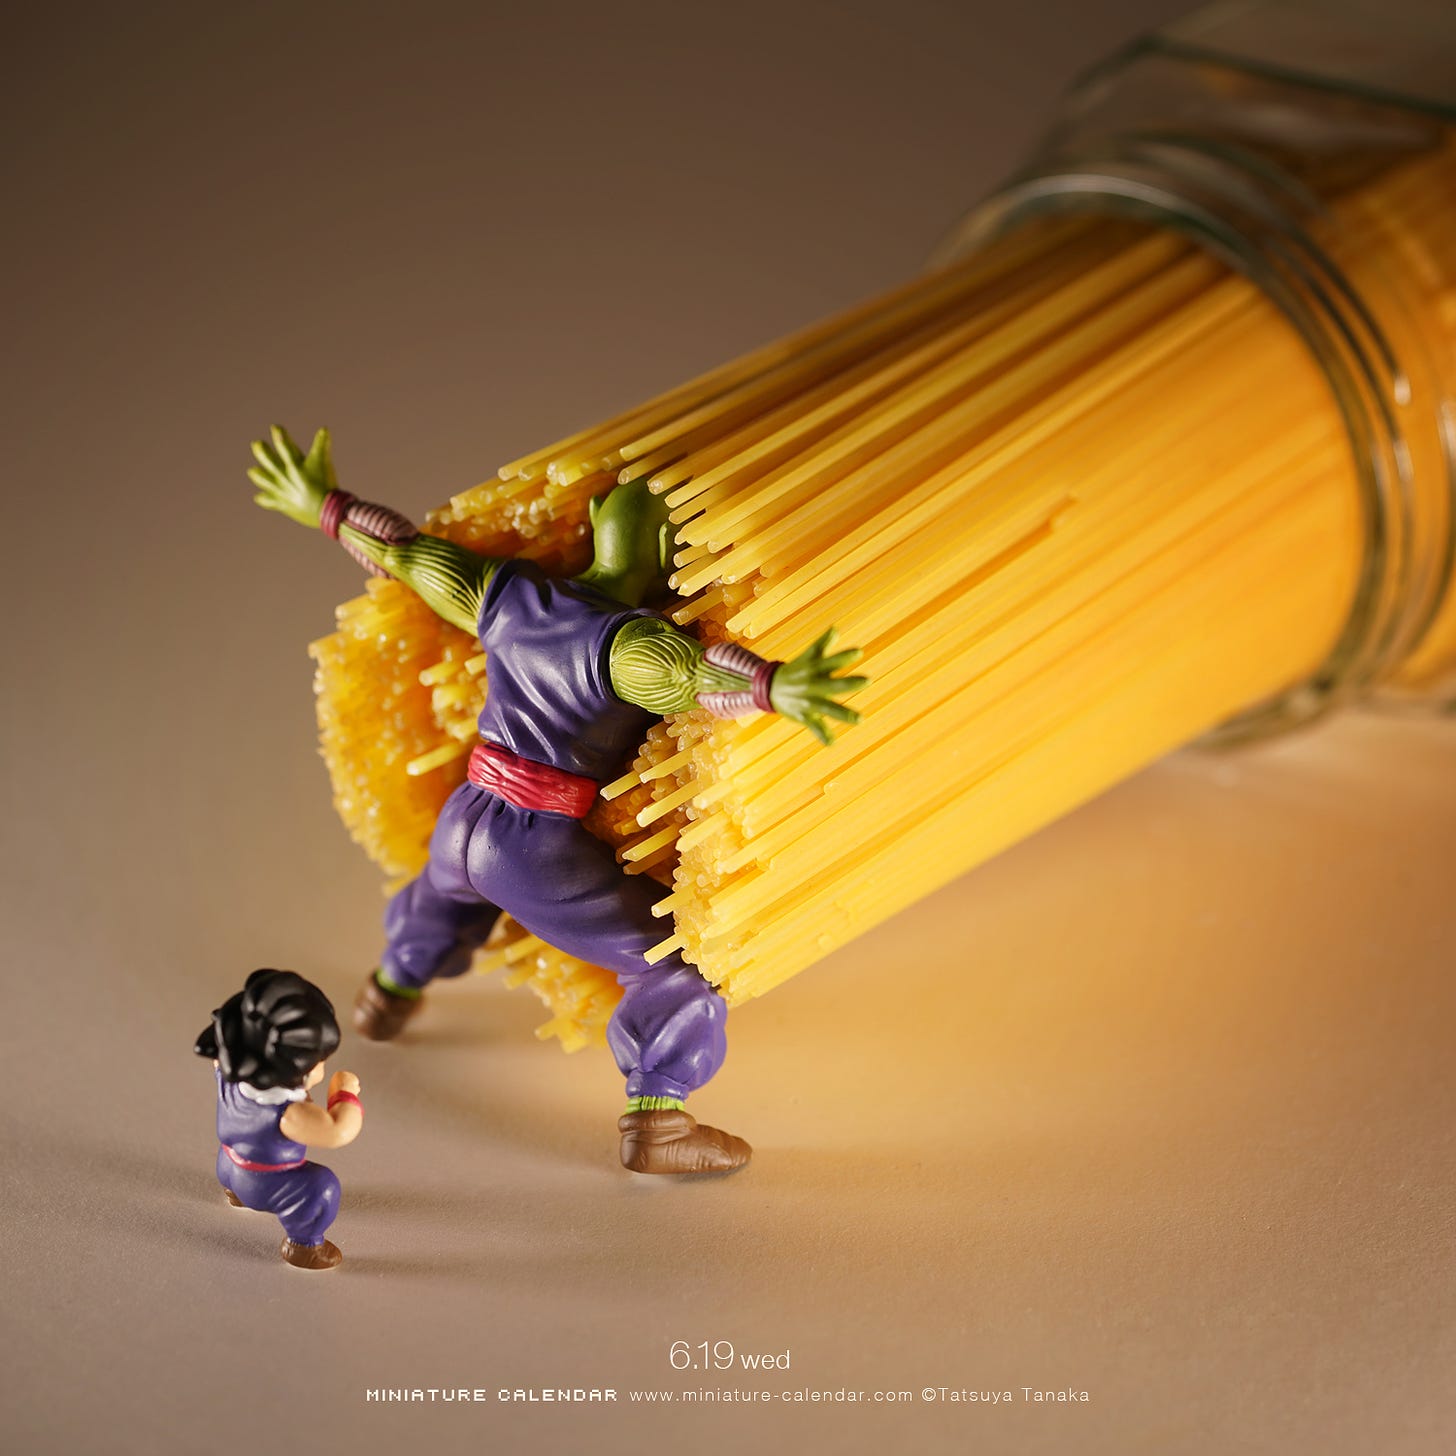 Piccolo & Gohan, by Tanaka Tatsuya